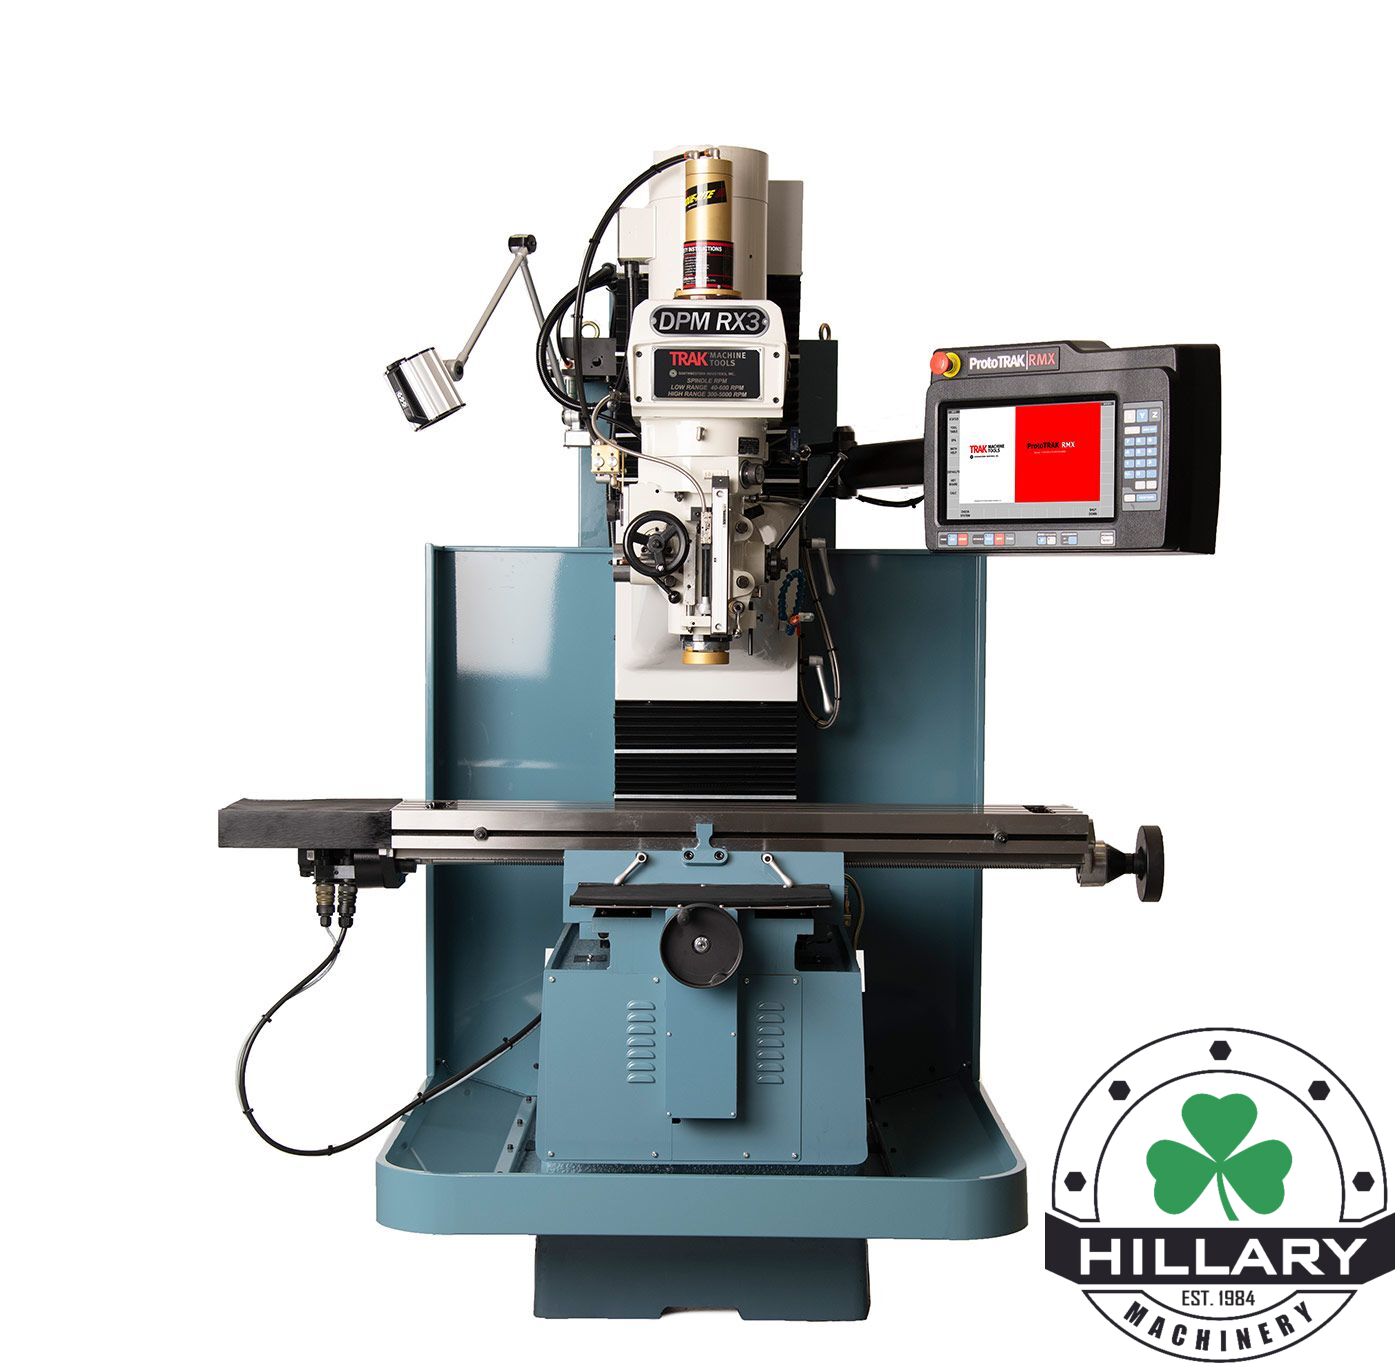 SOUTHWESTERN INDUSTRIES TRAK DPM RX3 Tool Room Mills | Hillary Machinery